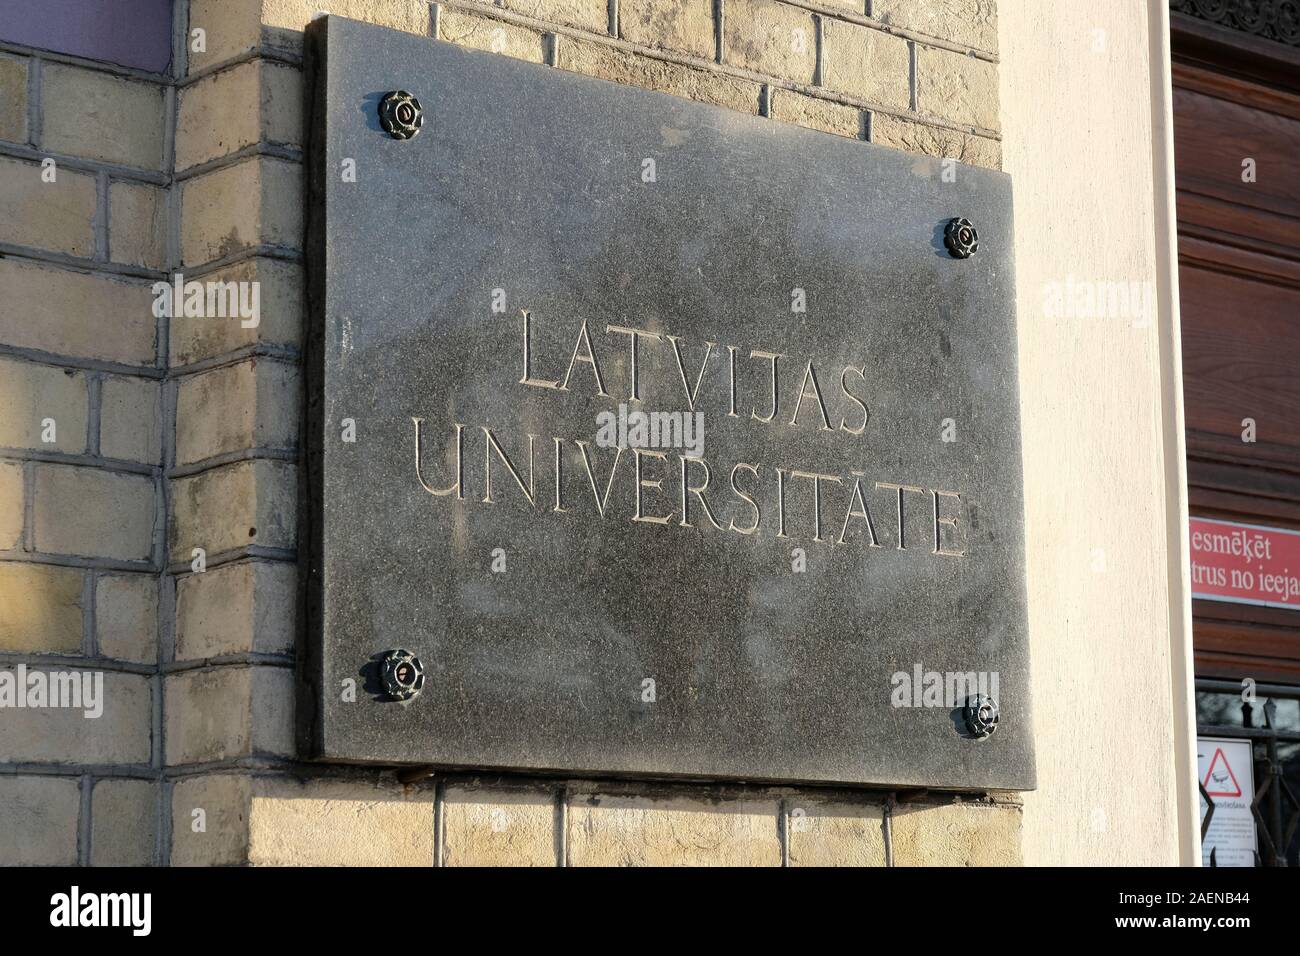 Latvijas universitate hi-res stock photography and images - Alamy